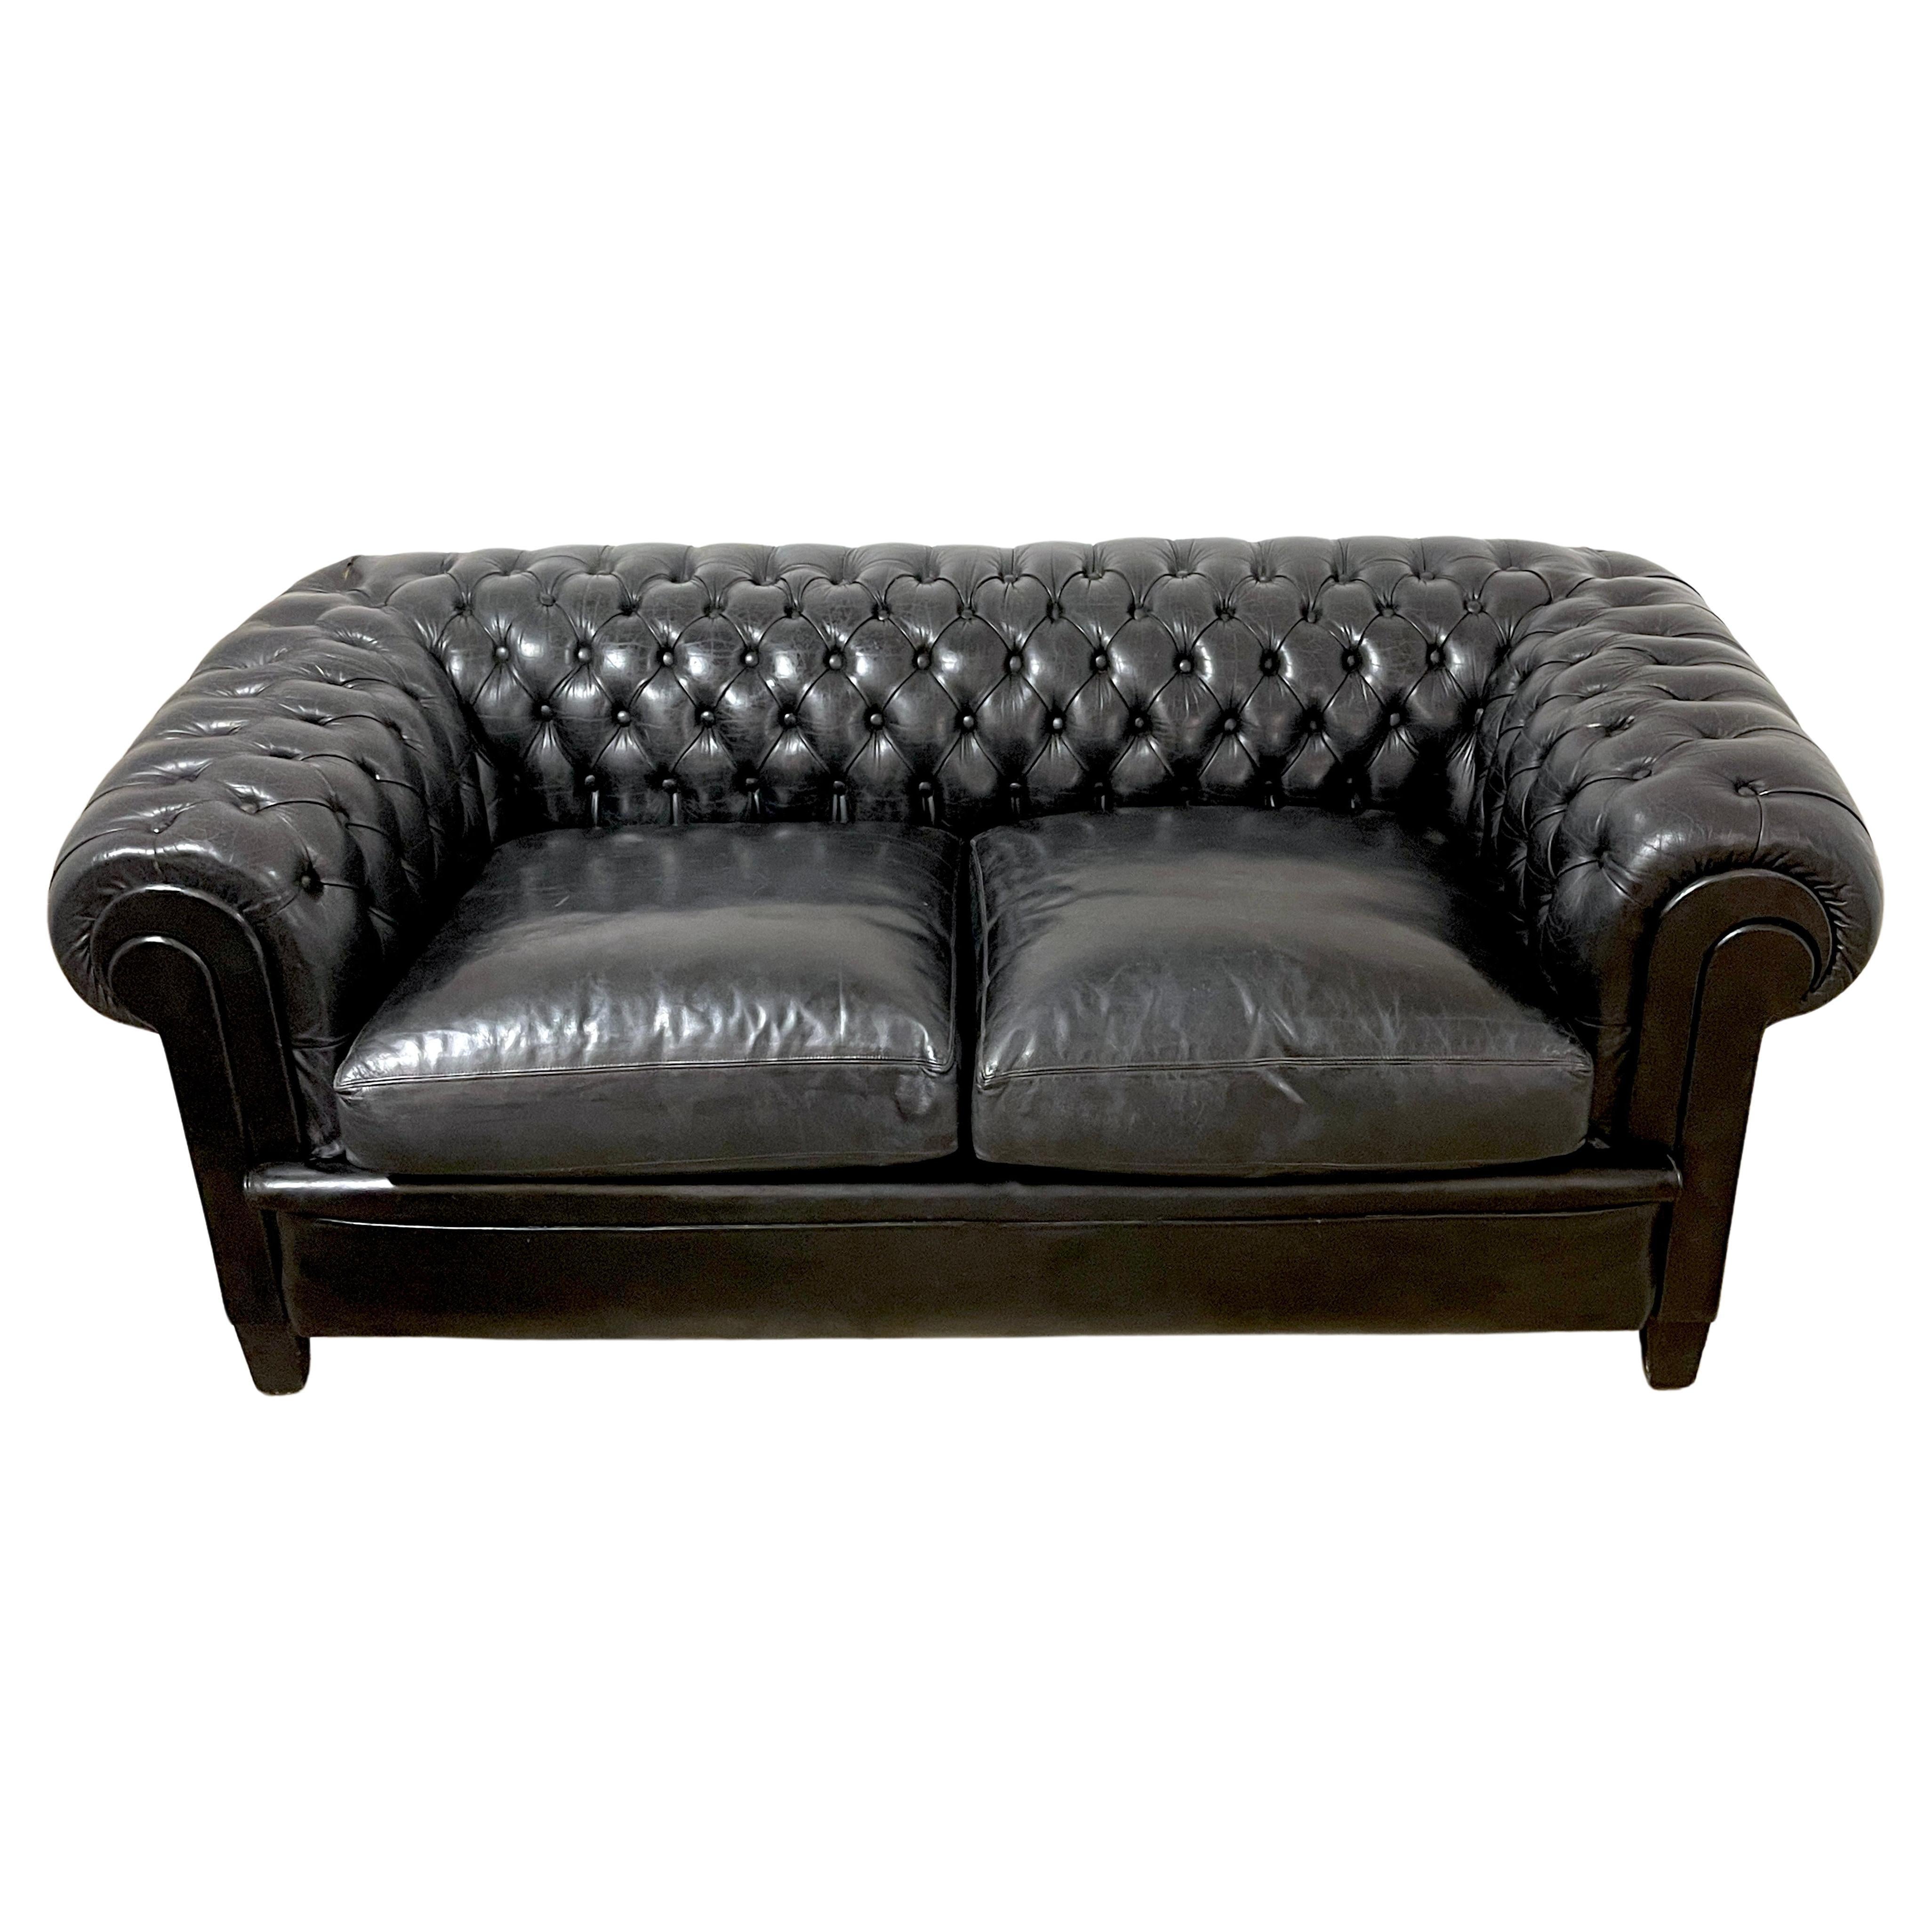 Gorgeous English Black Leather Chesterfield Sofa    